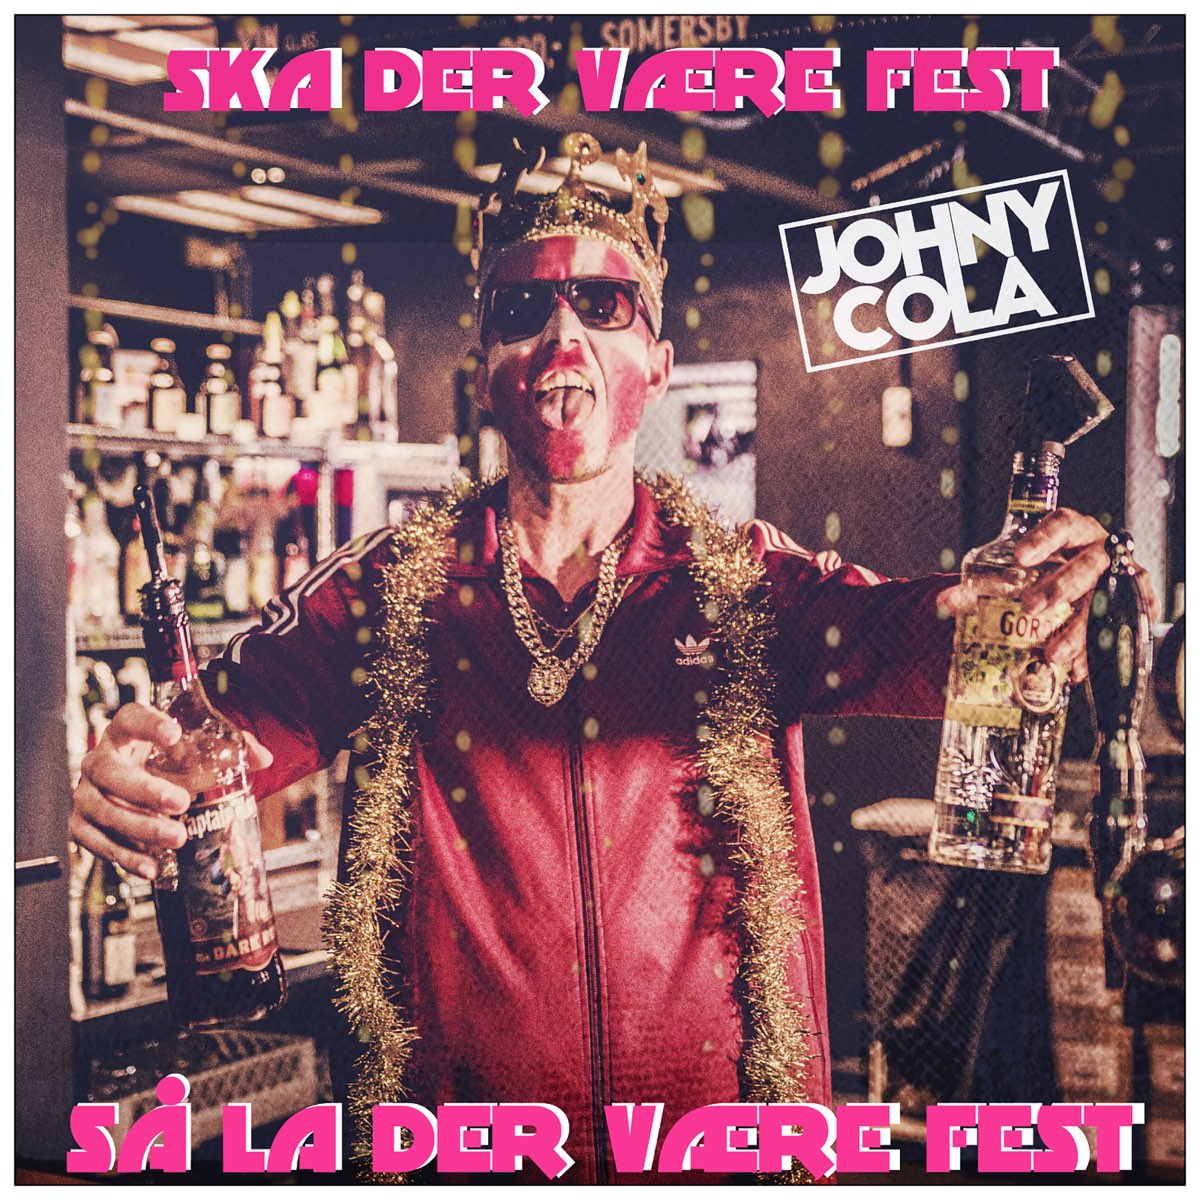 Ska Være Fest Så La Der Være Fest - Single by Johny Cola on Apple Music